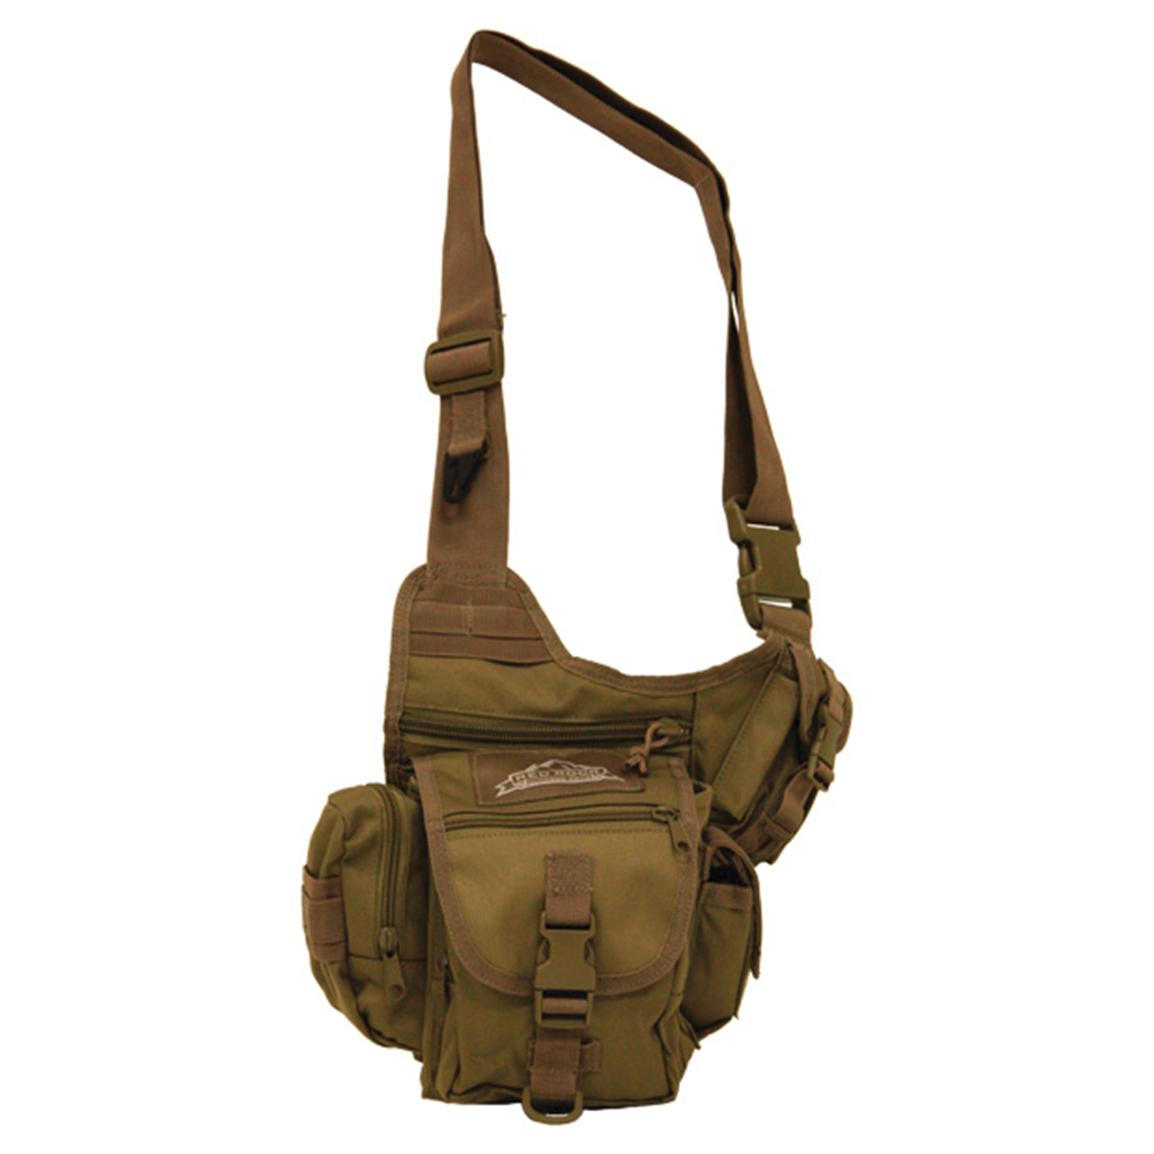 Red Rock Outdoor Gear™ Sidekick Sling Bag - 299878, Military Style Backpacks & Bags at Sportsman ...